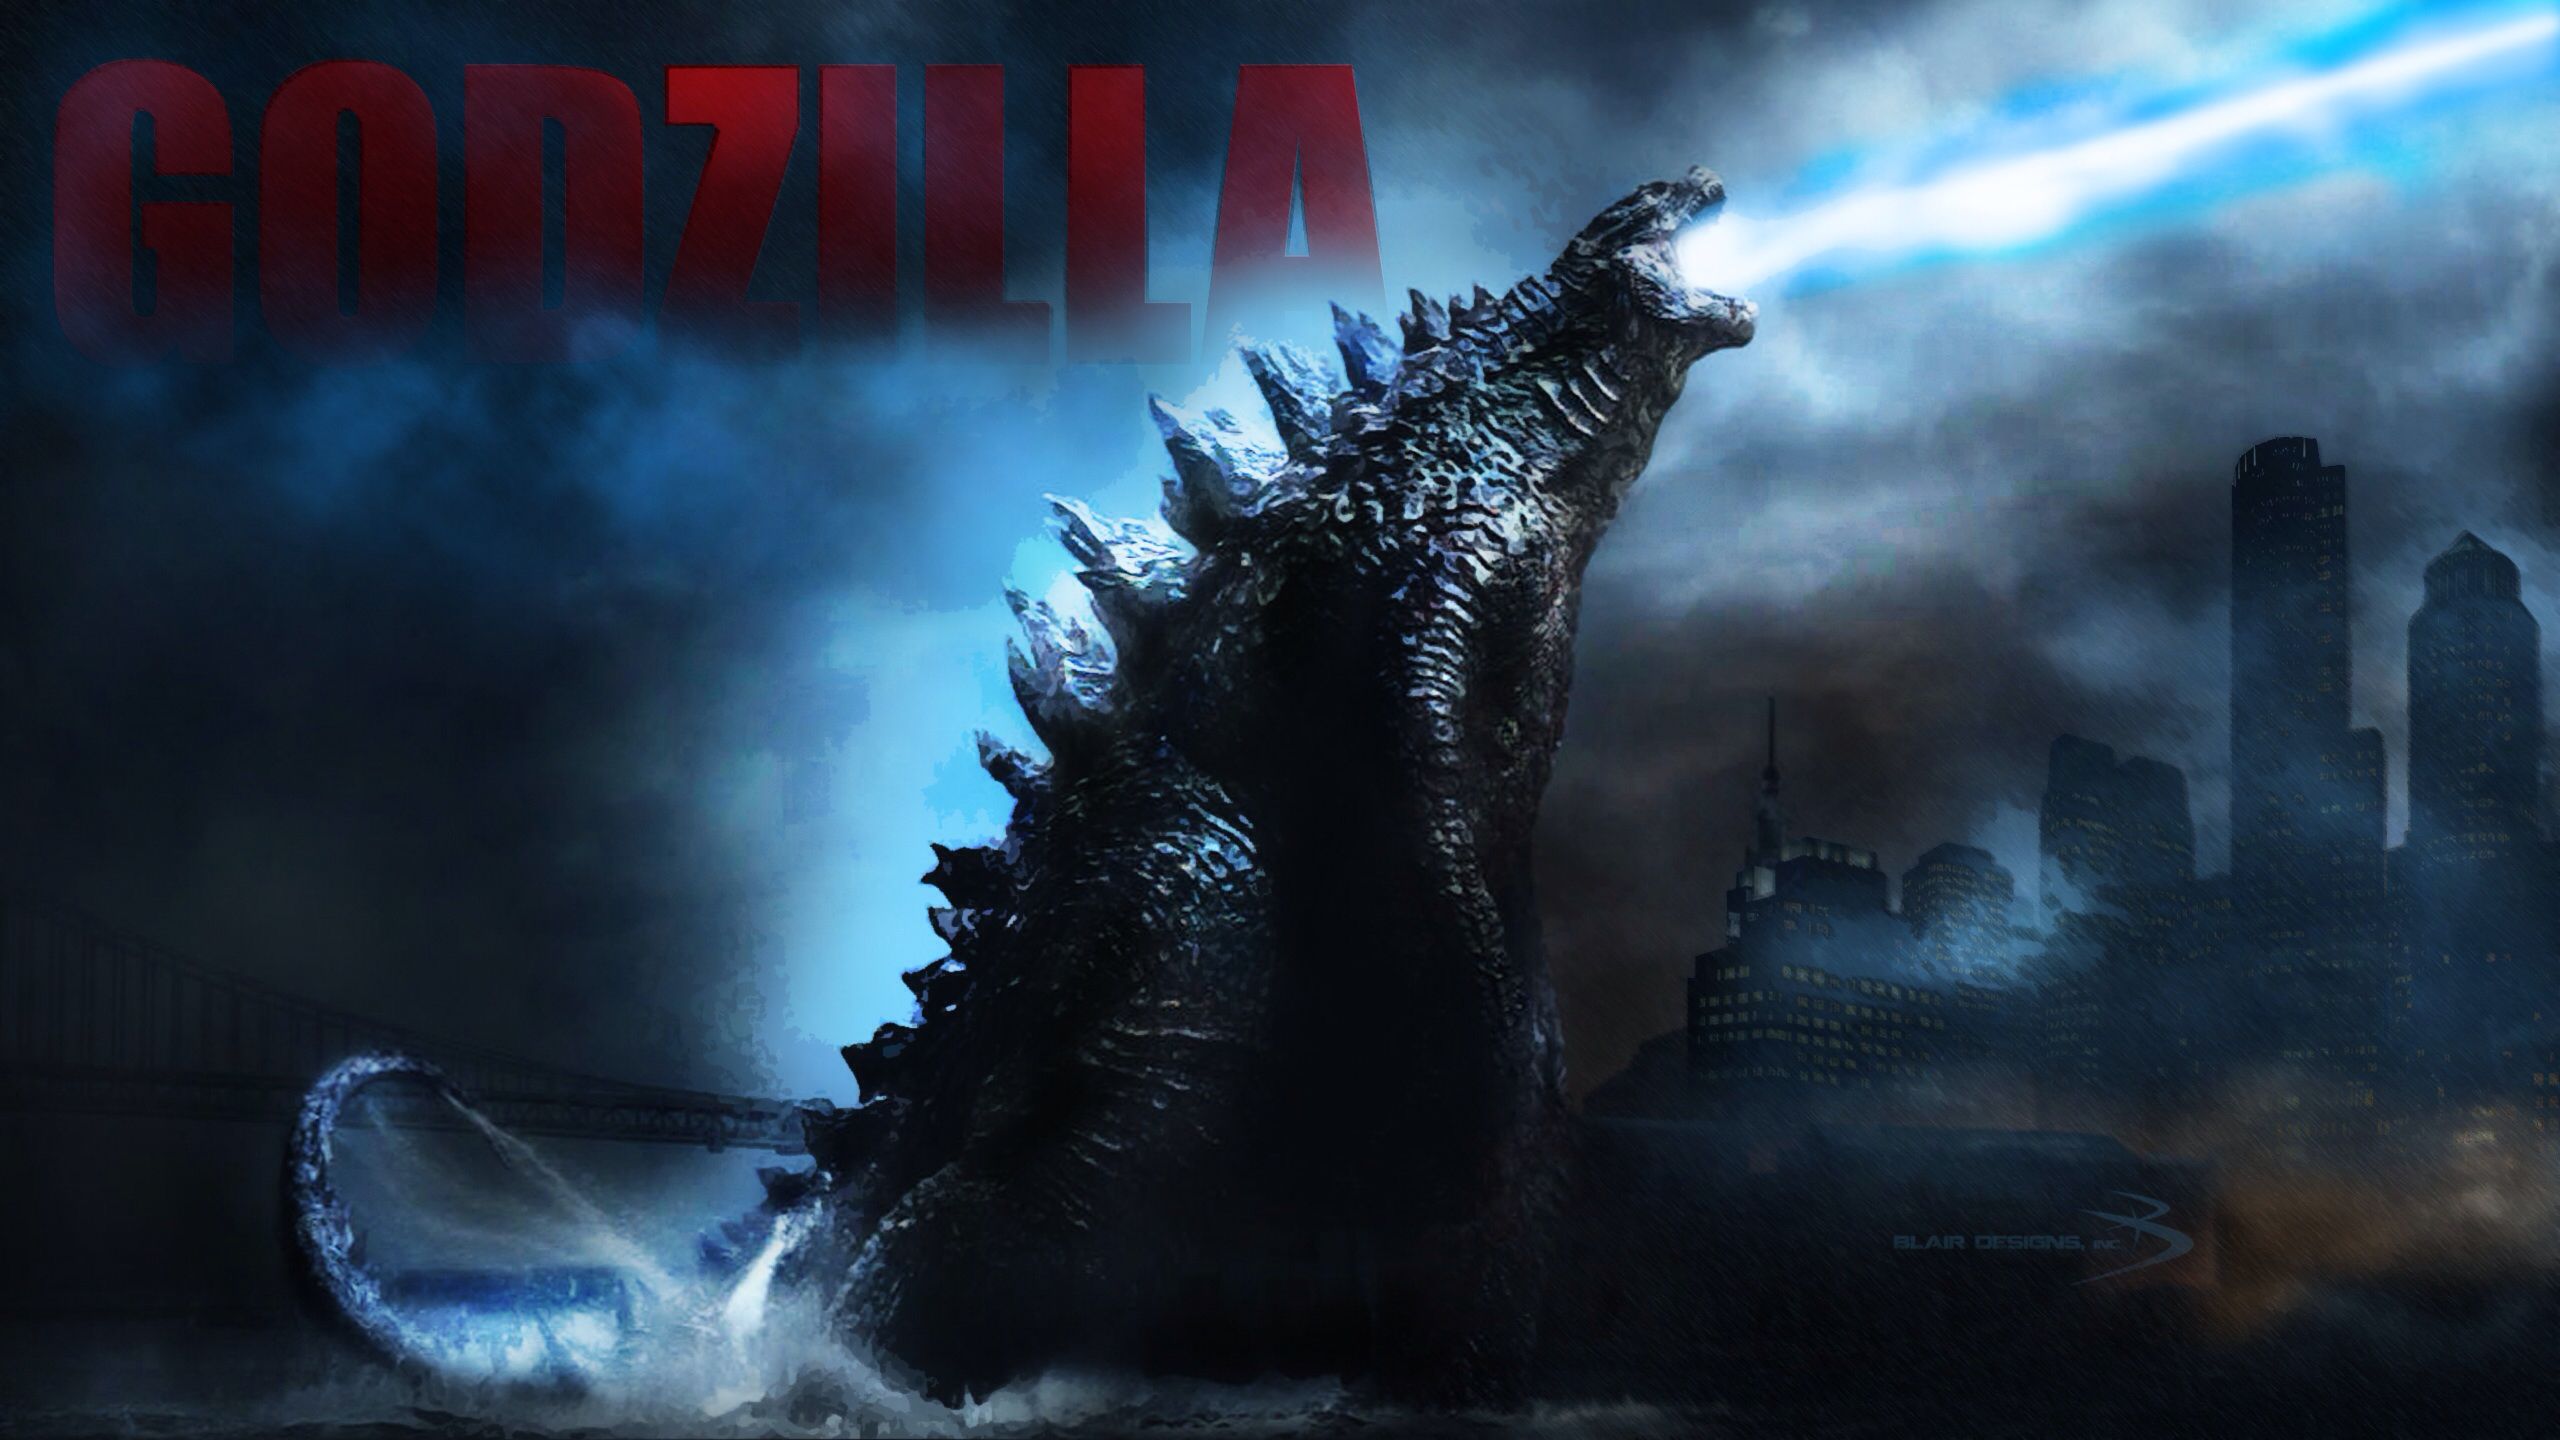 Godzilla: Atomic Breath Digital Illustration Photohop CC. Godzilla, Digital illustration, Kaiju